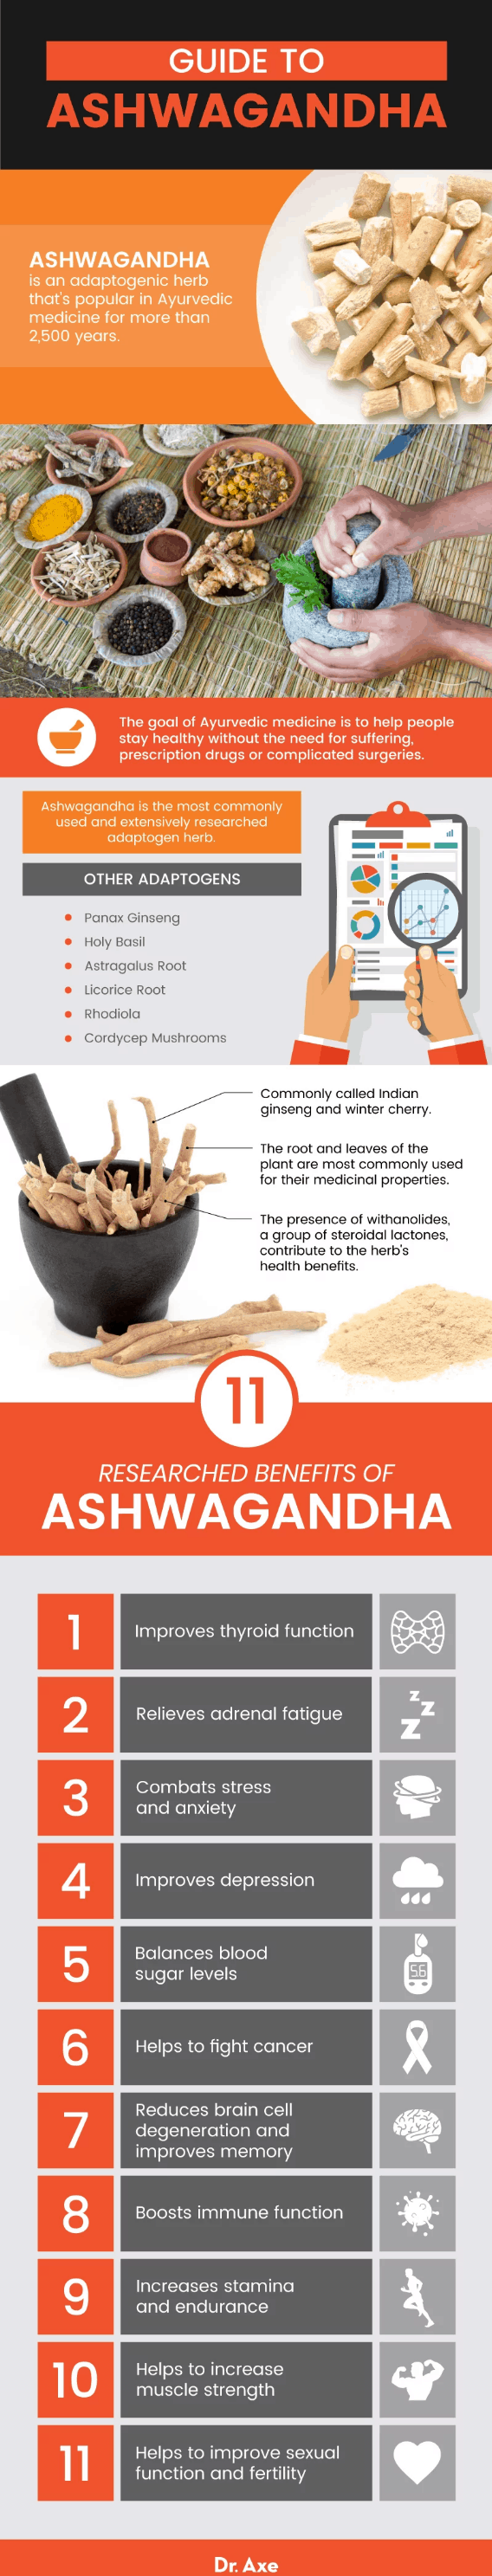 Ashwagandha benefits - Dr. Axe